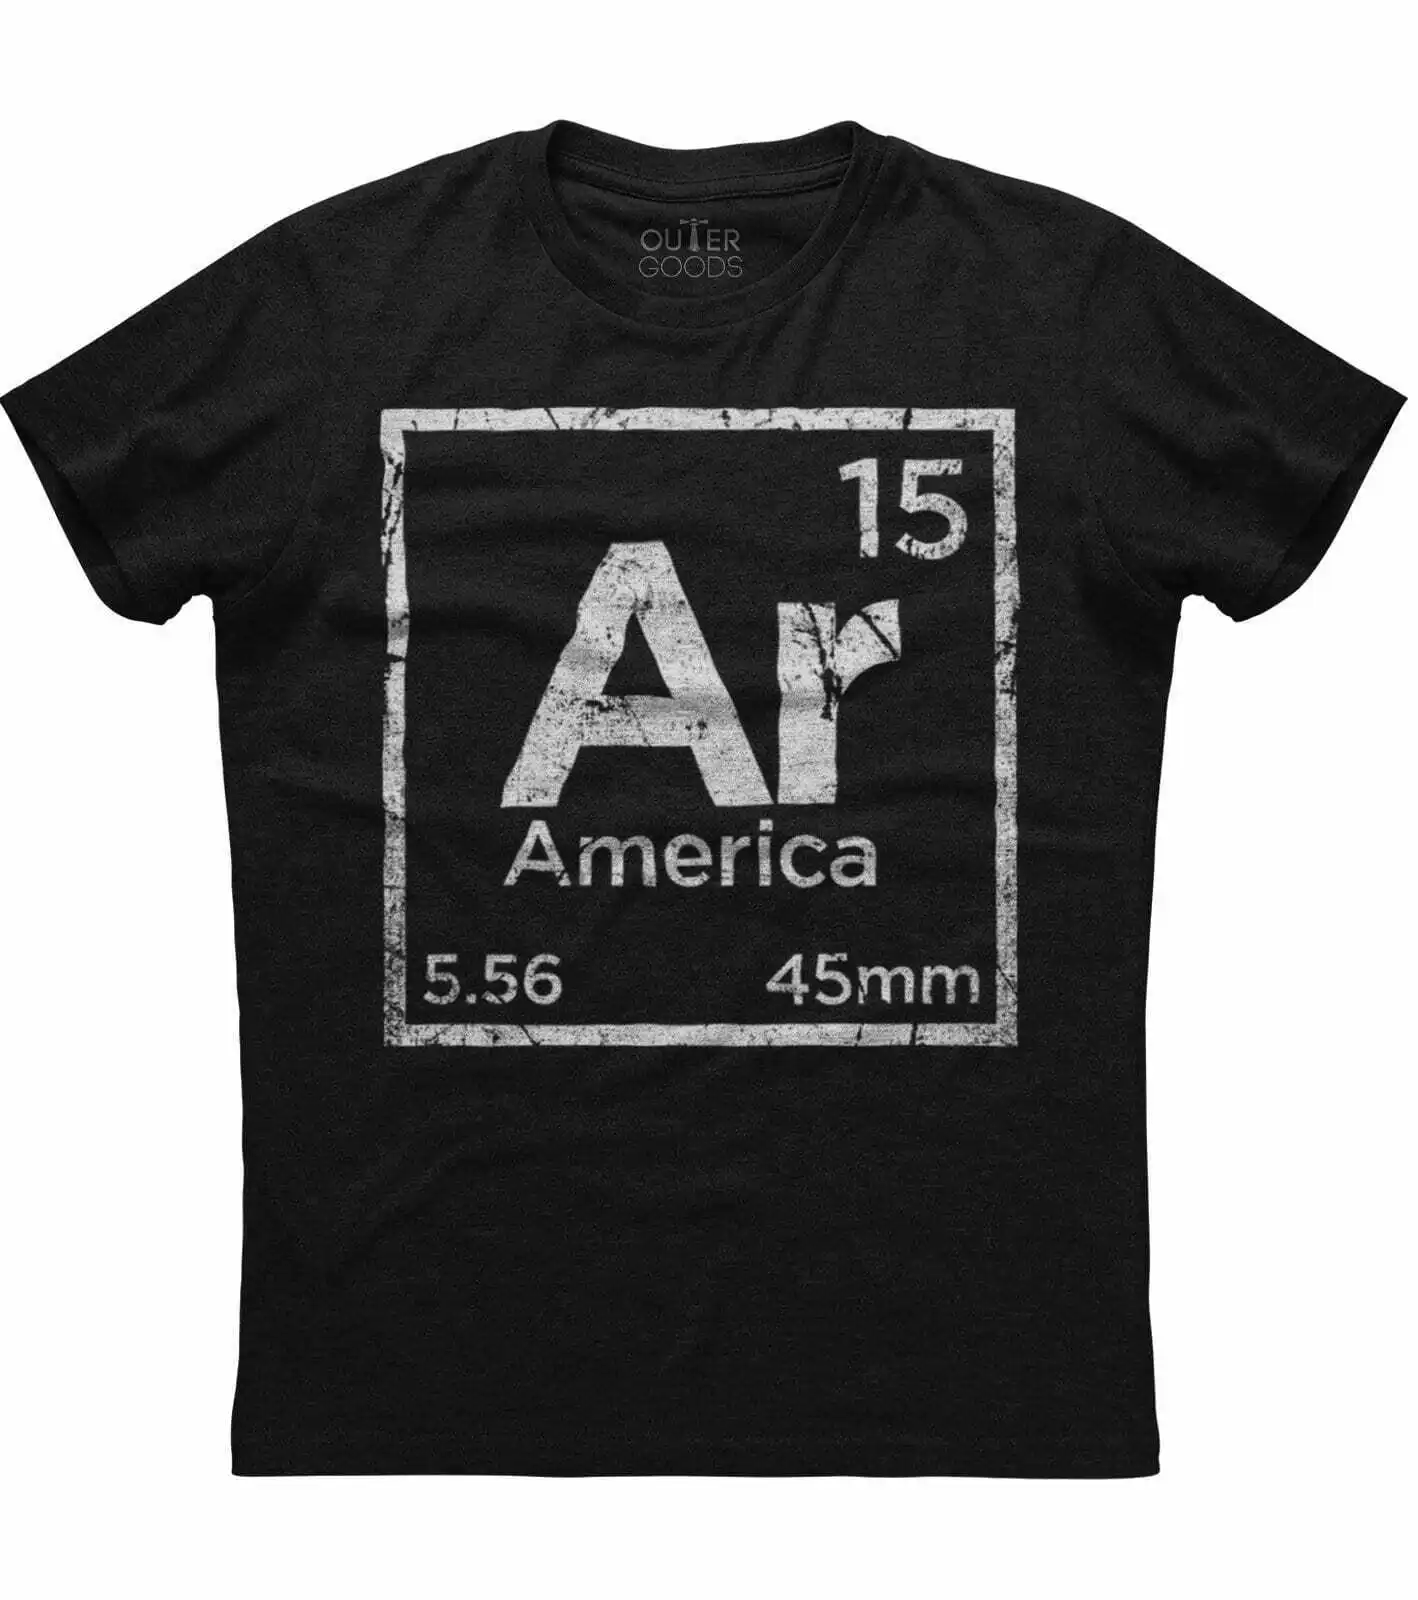 

American 2nd Amendment AR-15 America Ammo T-Shirt. Summer Cotton O-Neck Short Sleeve Mens T Shirt New S-3XL